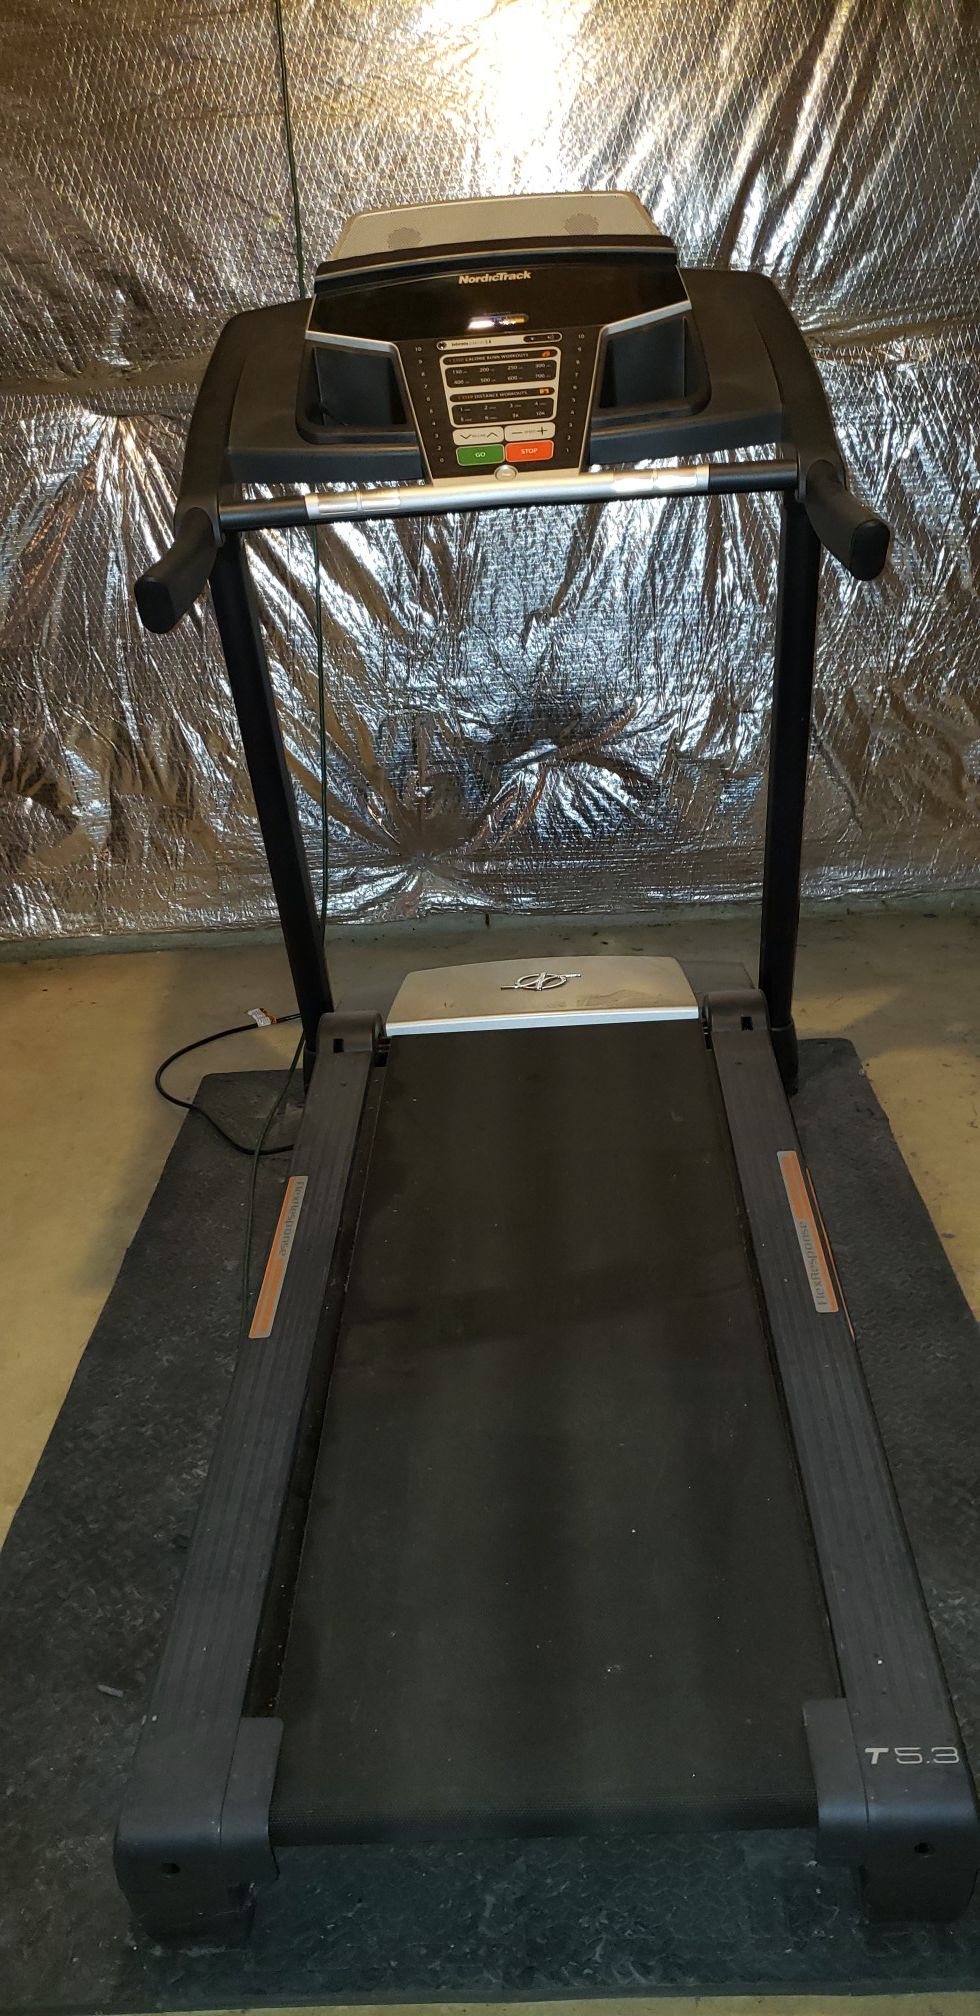 Treadmill, NordicTrack, T5.3, FlexResponse